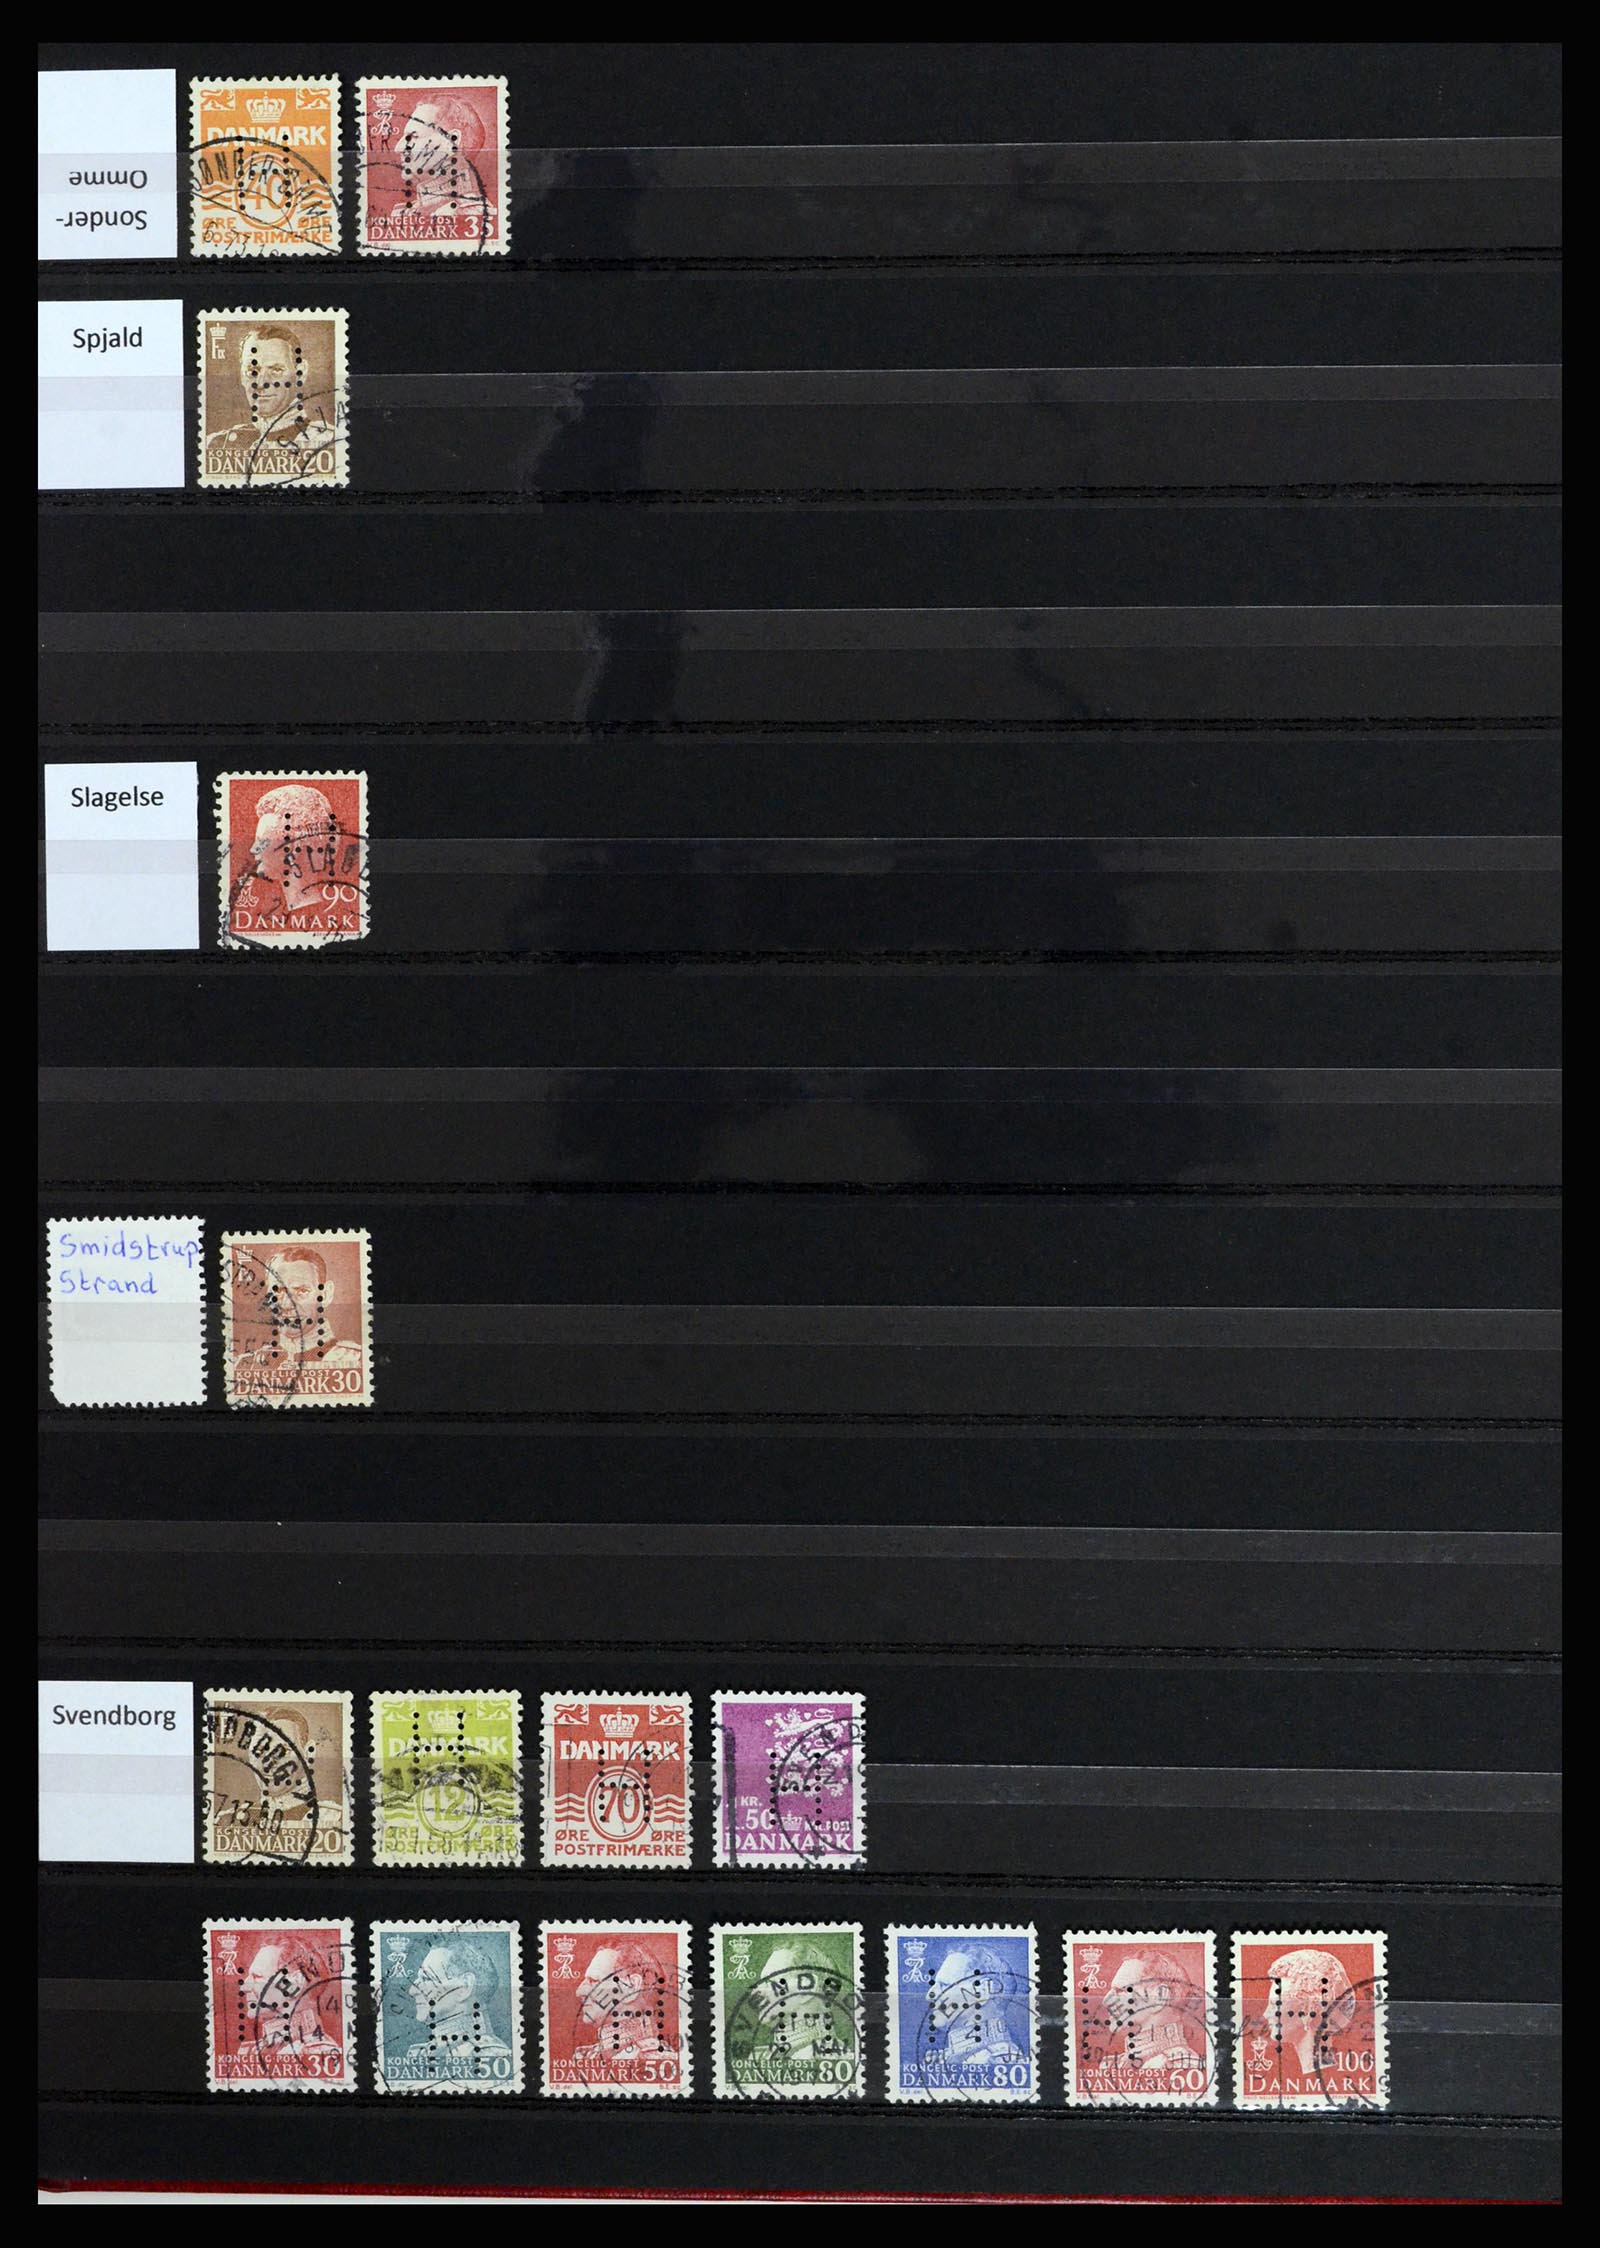 37056 011 - Stamp collection 37056 Denmark perfins.